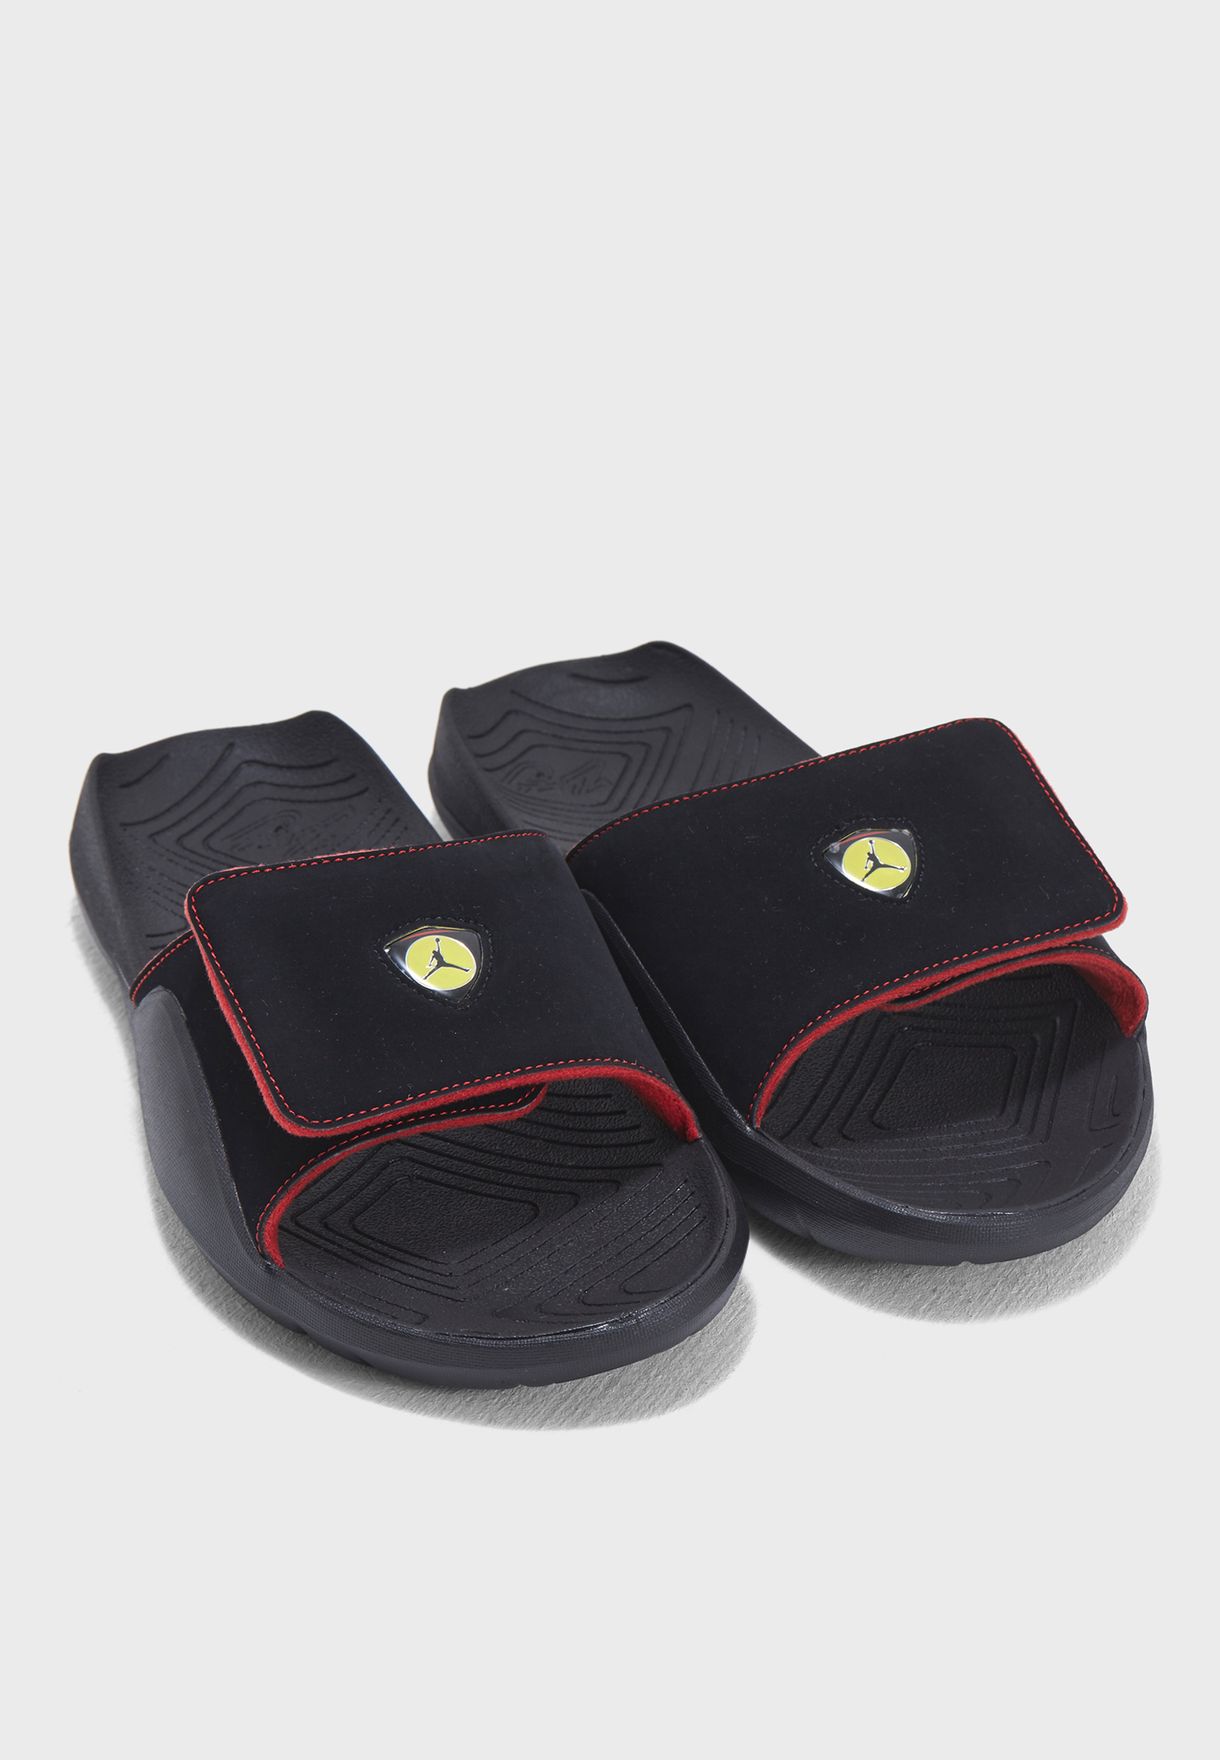 jordan hydro 7 slippers